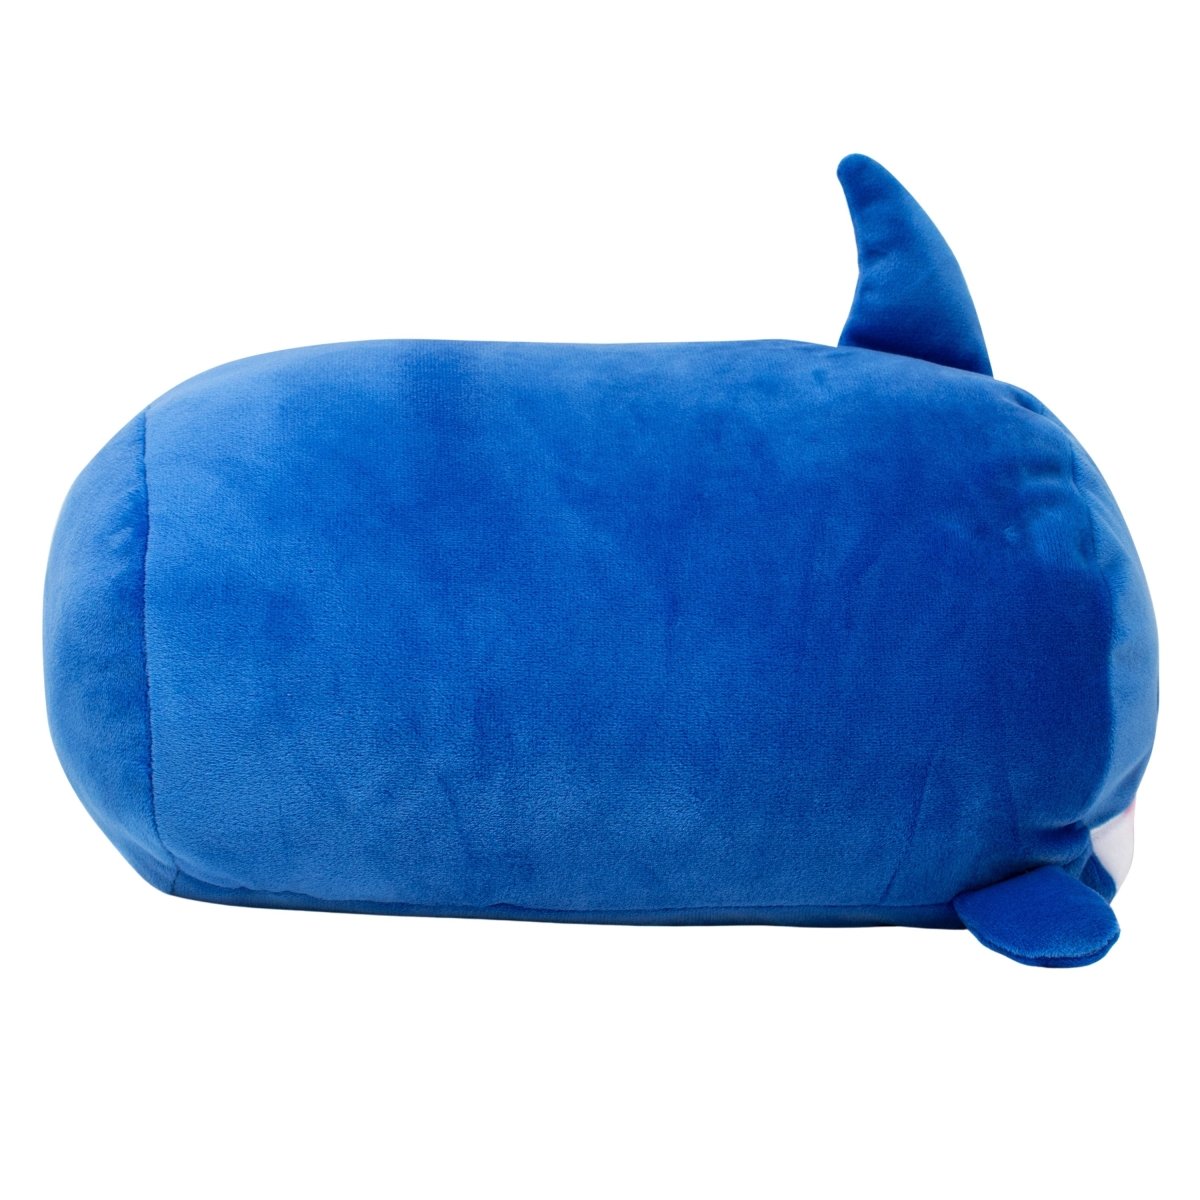 Azul the Shark Plushie